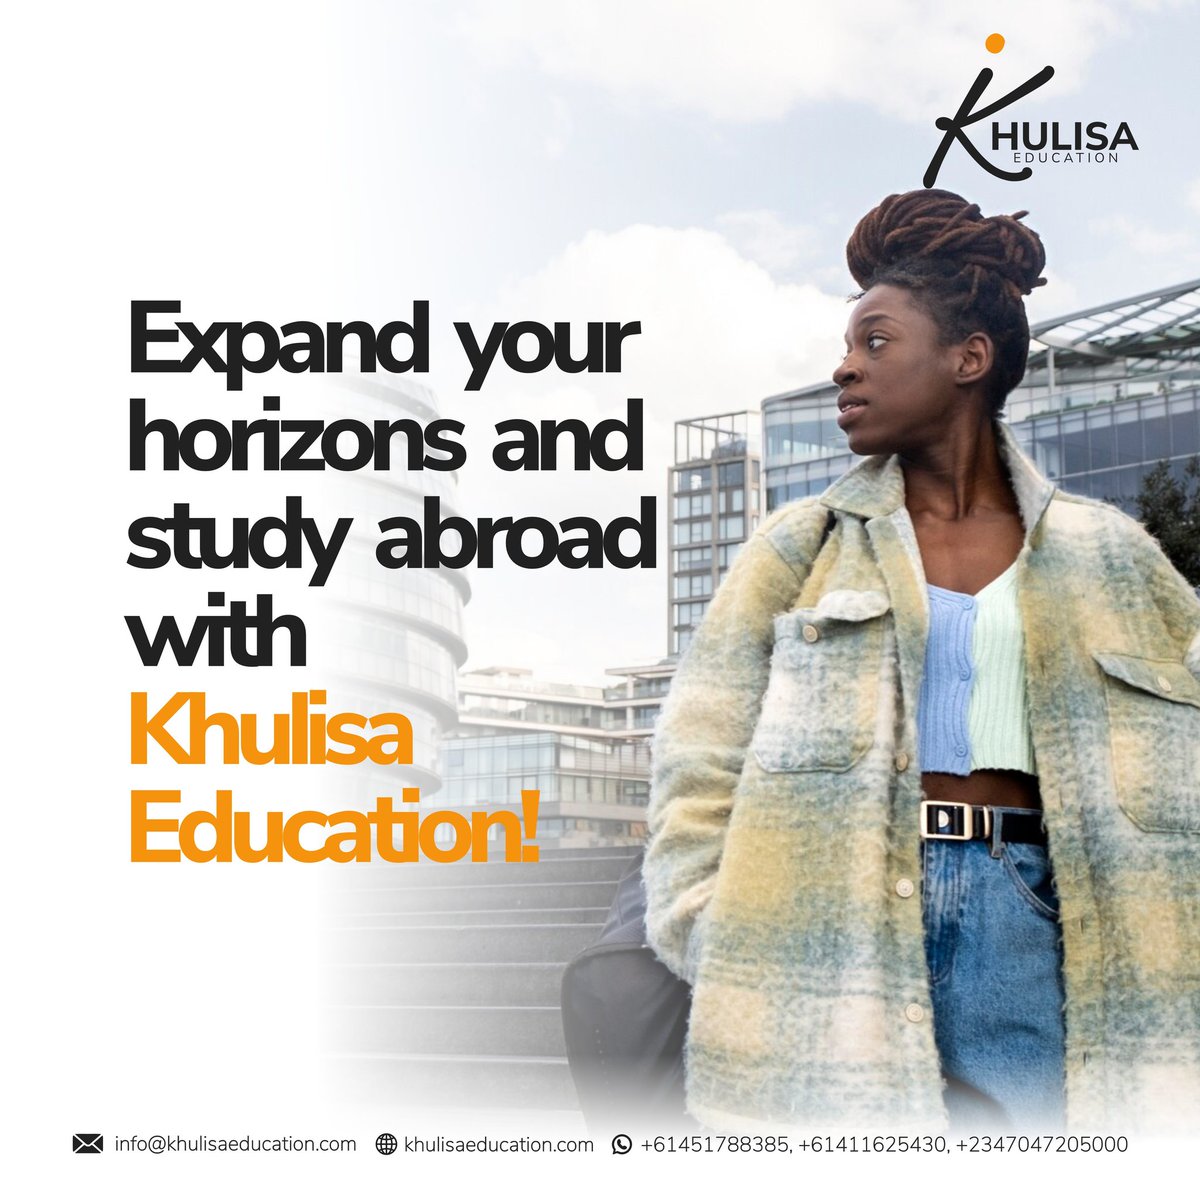 Expand your horizons and study abroad with Khulisa Education 

#khulisa #khulisaEducation #studyoverseas #studyingabroad #studyinaustralia #studyincanada #studyinuk #studyinireland #studyinusa